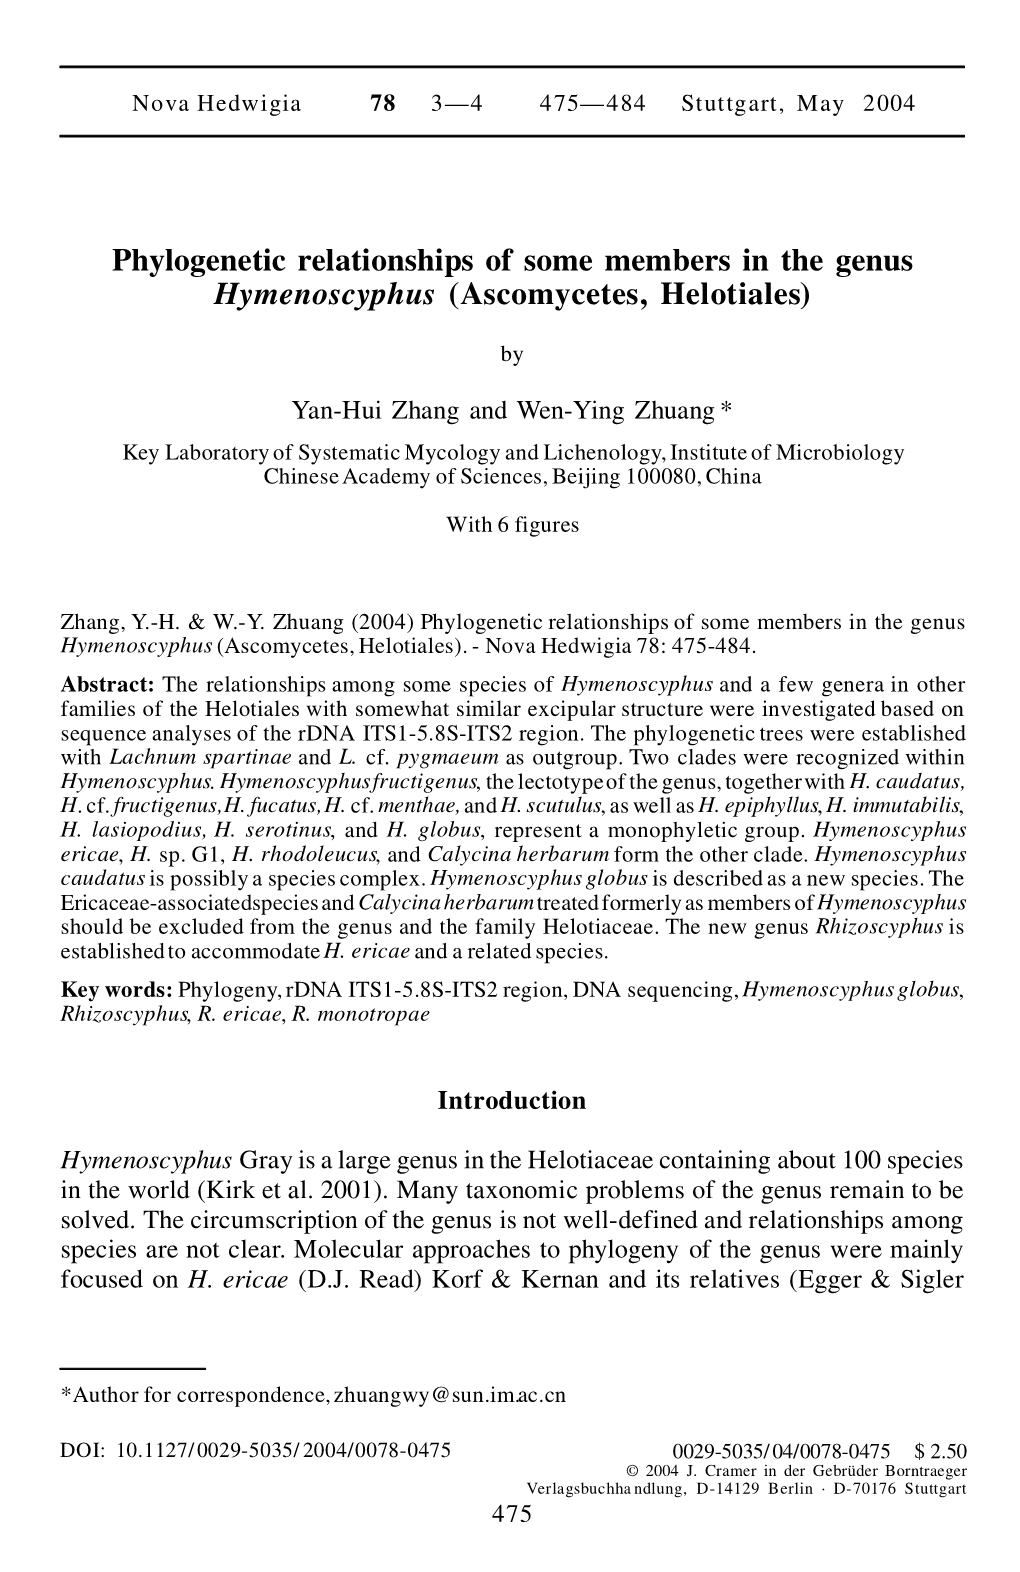 Phylogenetic Relationships of Some Members in the Genus Hymenoscyphus (Ascomycetes, Helotiales )